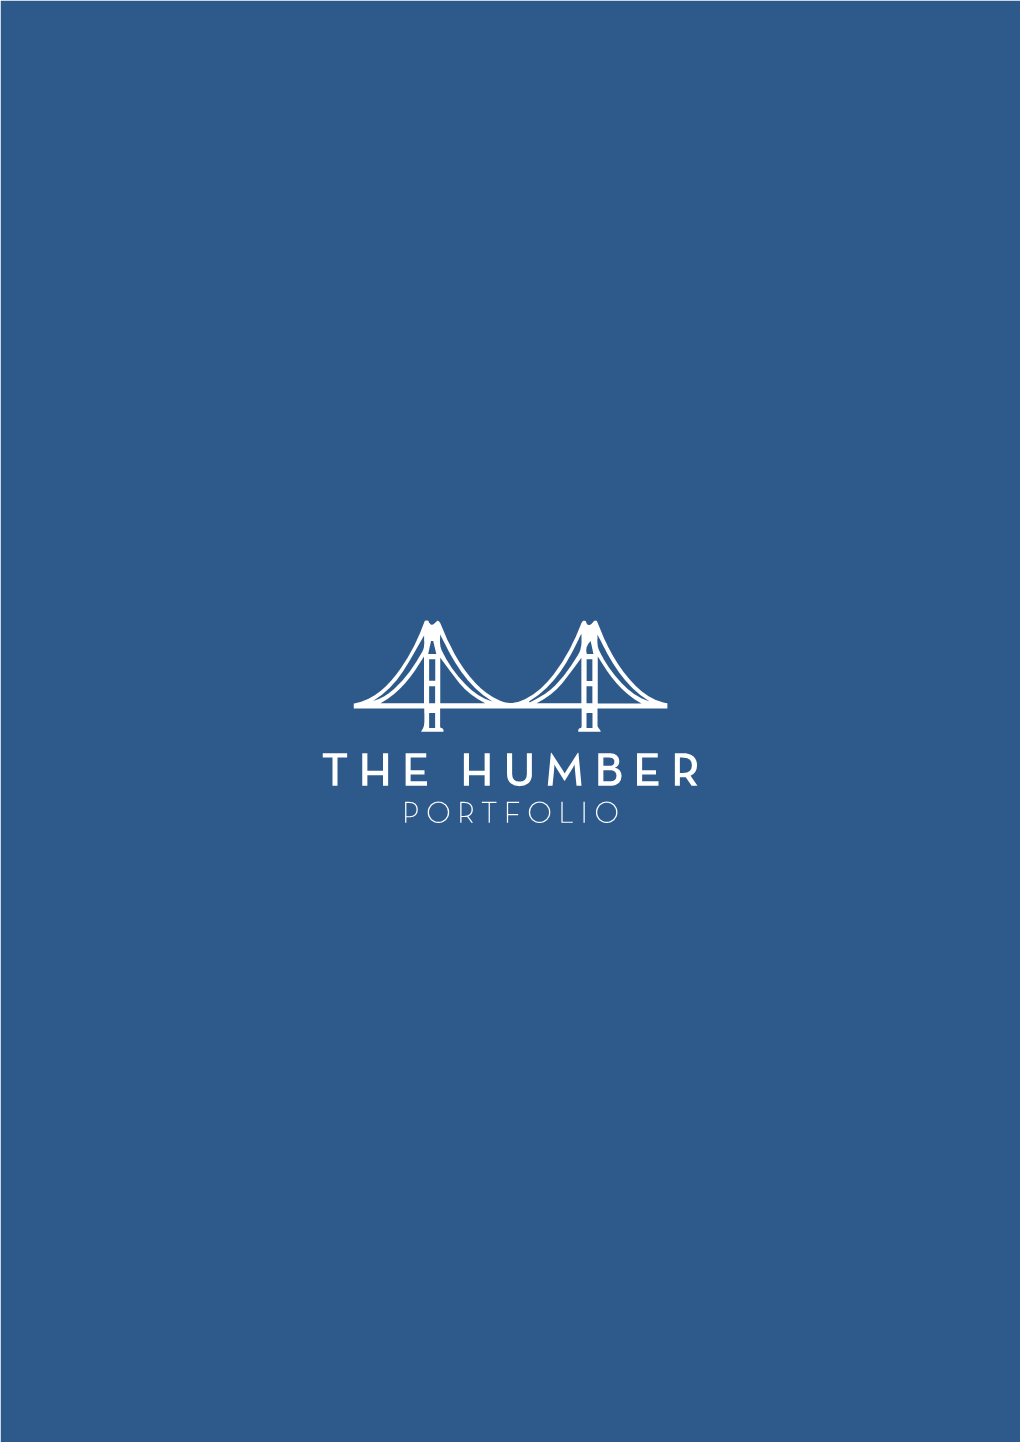 The Humber Portfolio